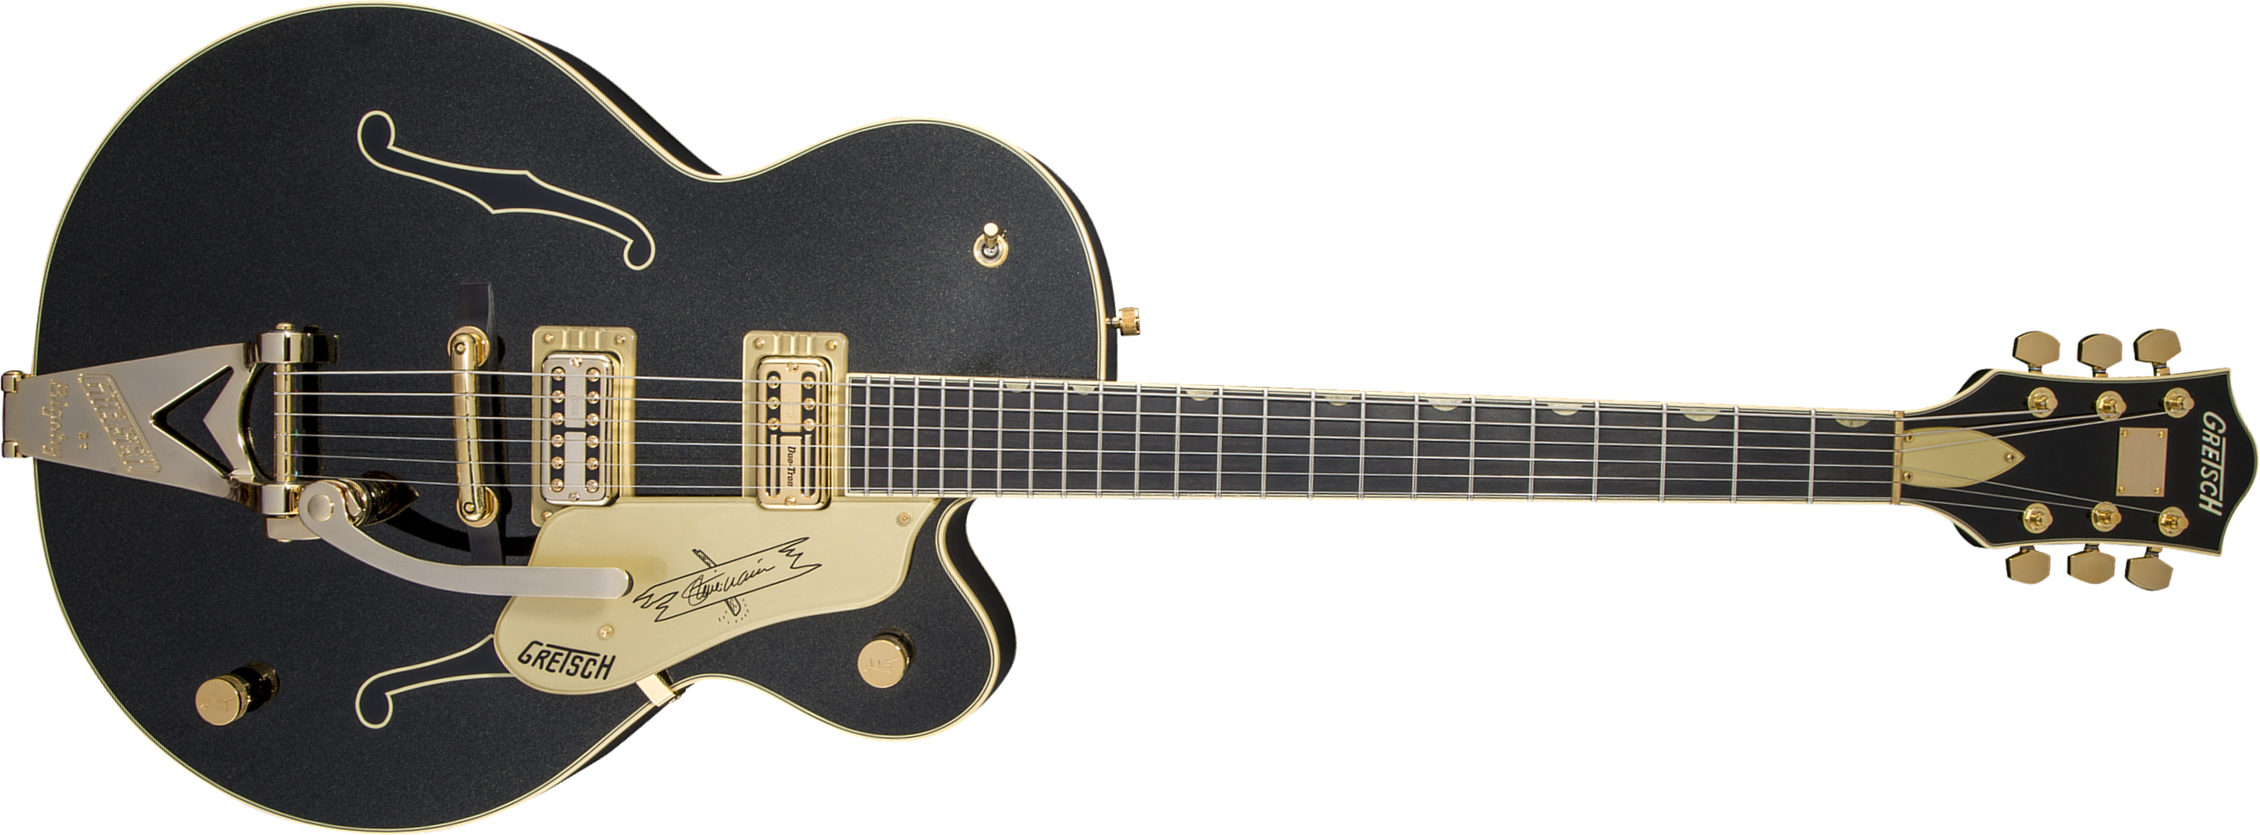 Gretsch Steve Wariner G6120t-sw Nashville Japon Signature Hh Bigsby Eb - Magic Black - Semi-hollow electric guitar - Main picture